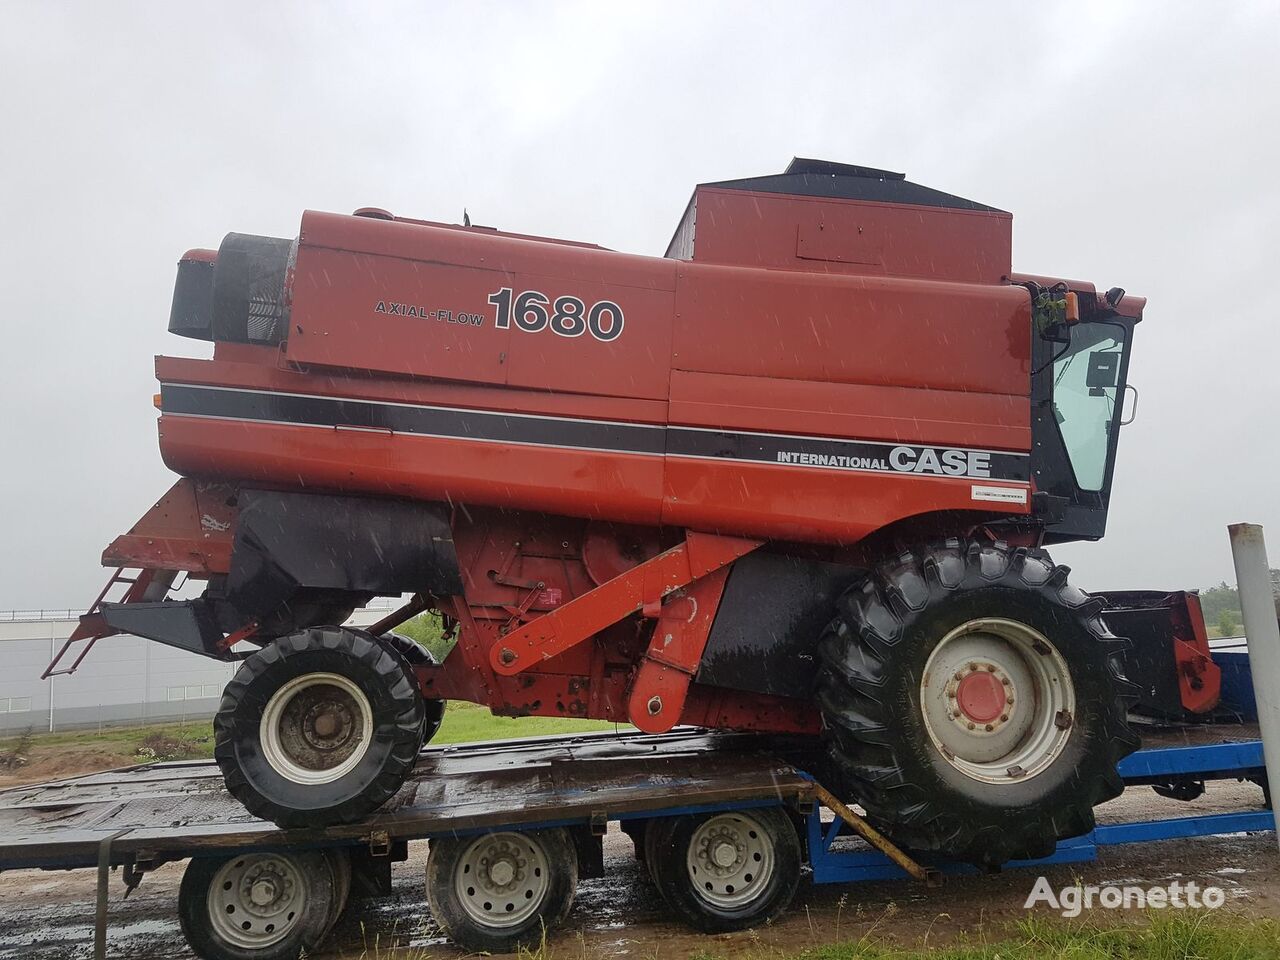 Cummins 6TA-830 engine for Case IH 1680 grain harvester